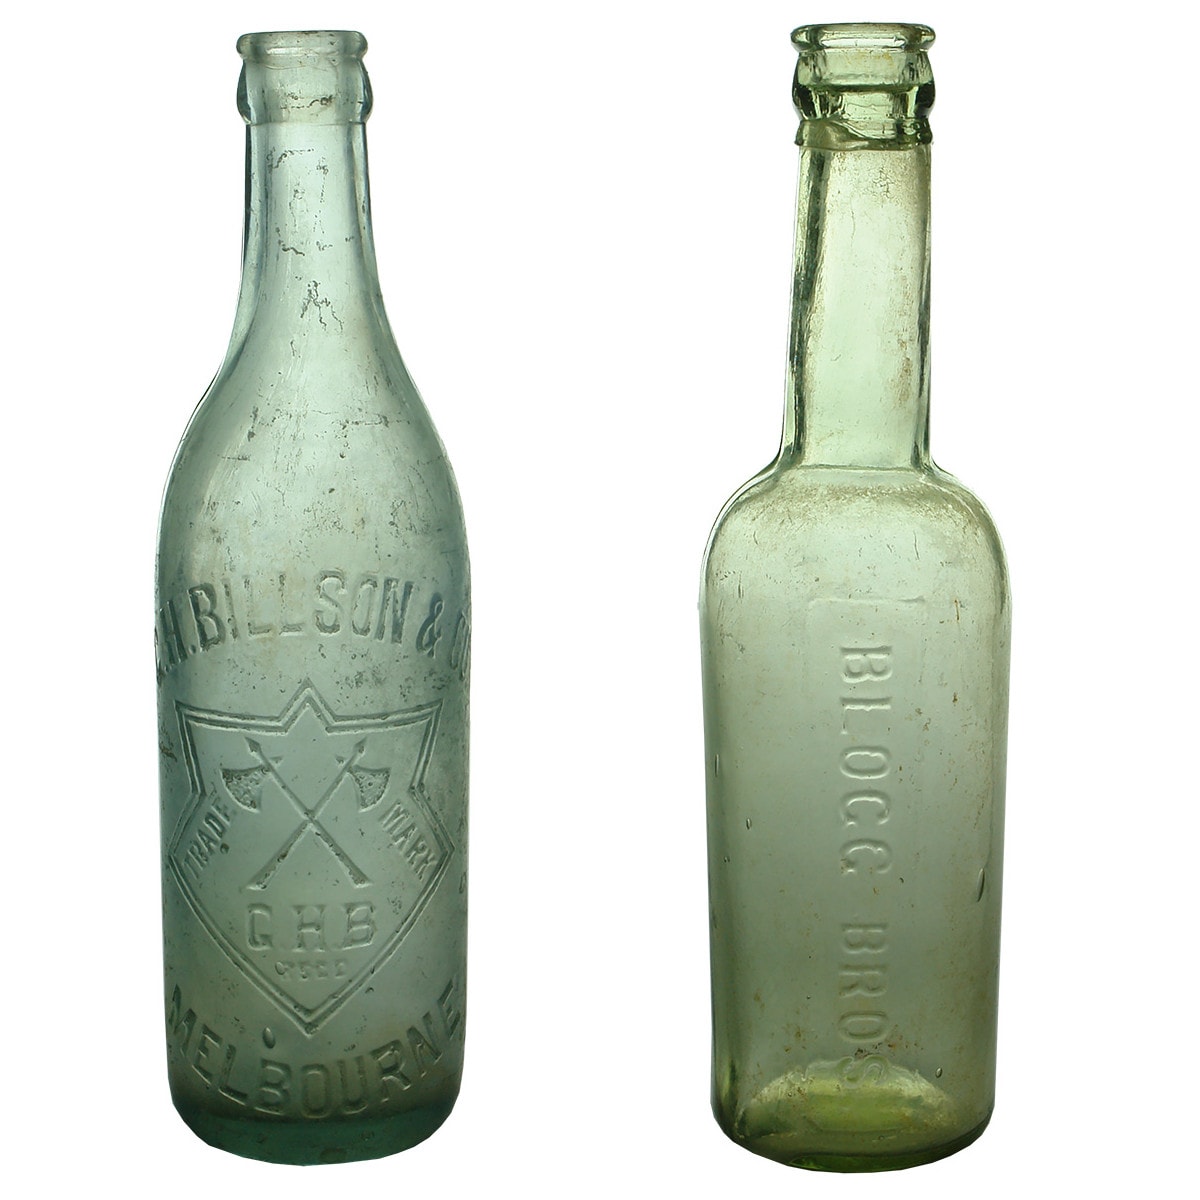 2 Bottles. G. H. Billson & Co., Melbourne crown seal and Blogg Bros sauce. (Victoria)